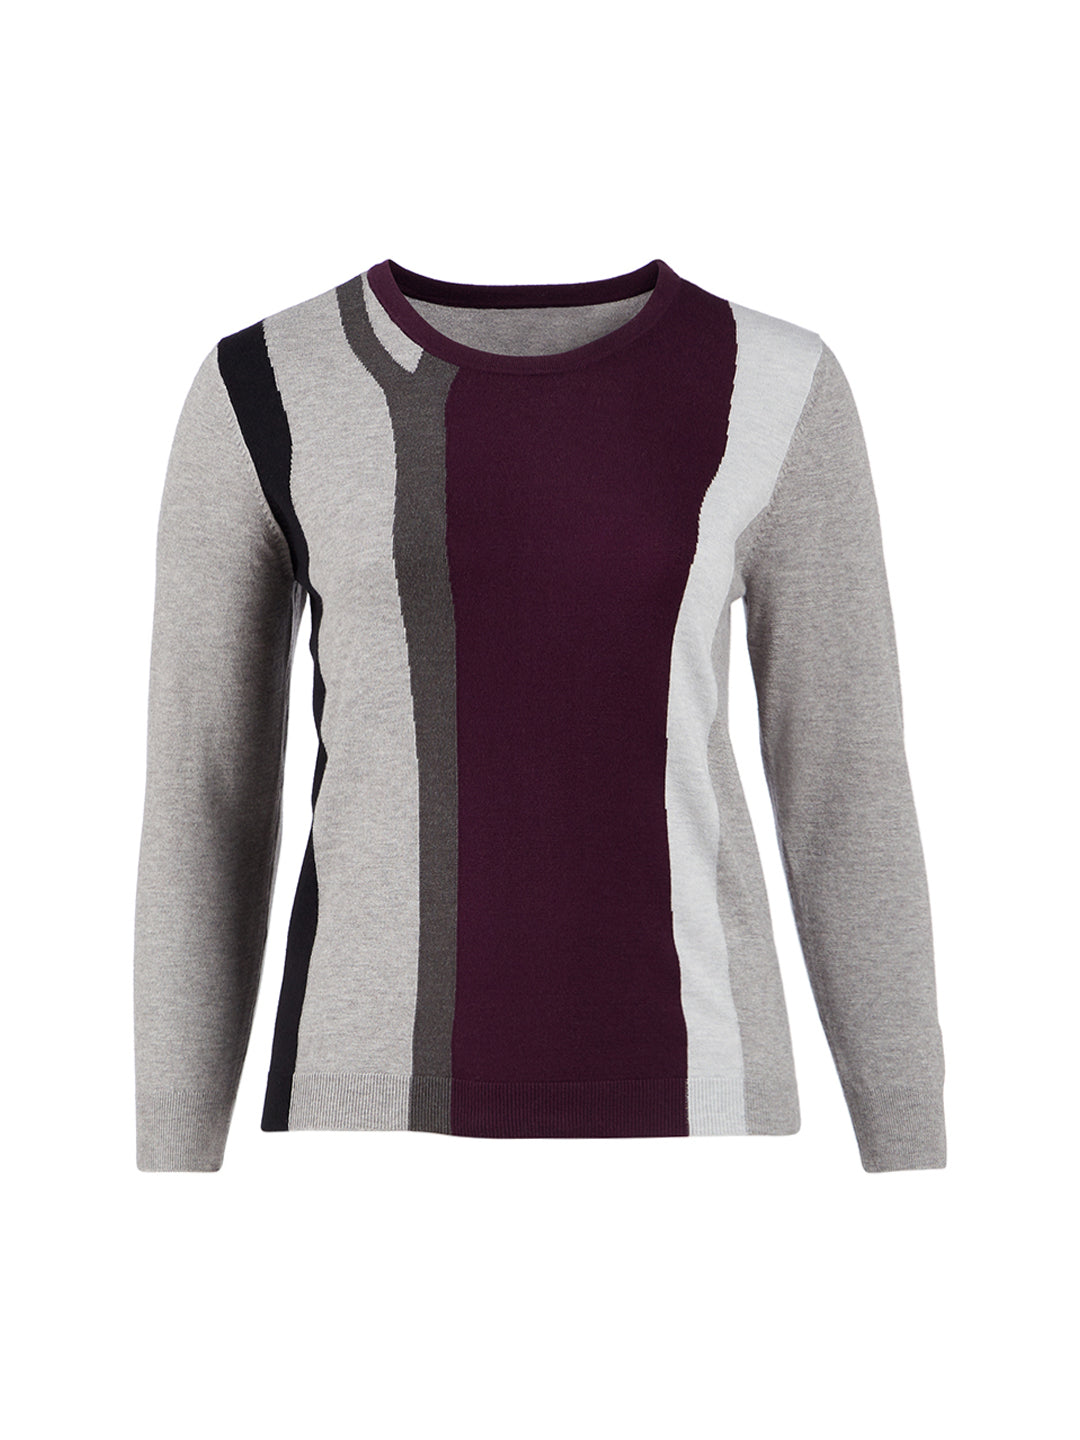 Color Block Crew Neck Sweater | Calvin Klein | Gwynnie Bee Rental  Subscription